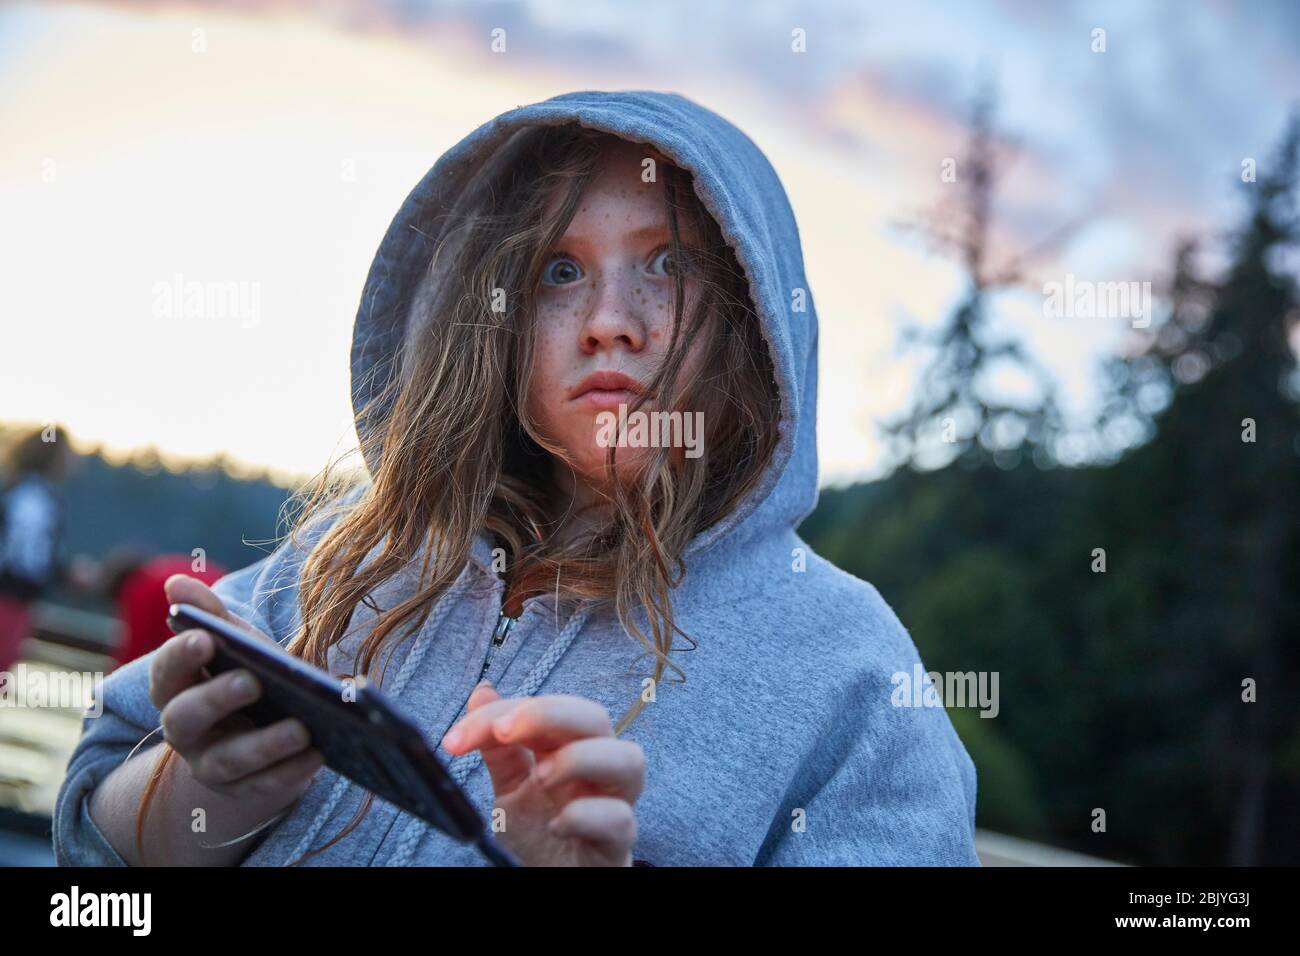 Girl in hoodie using phone Stock Photo